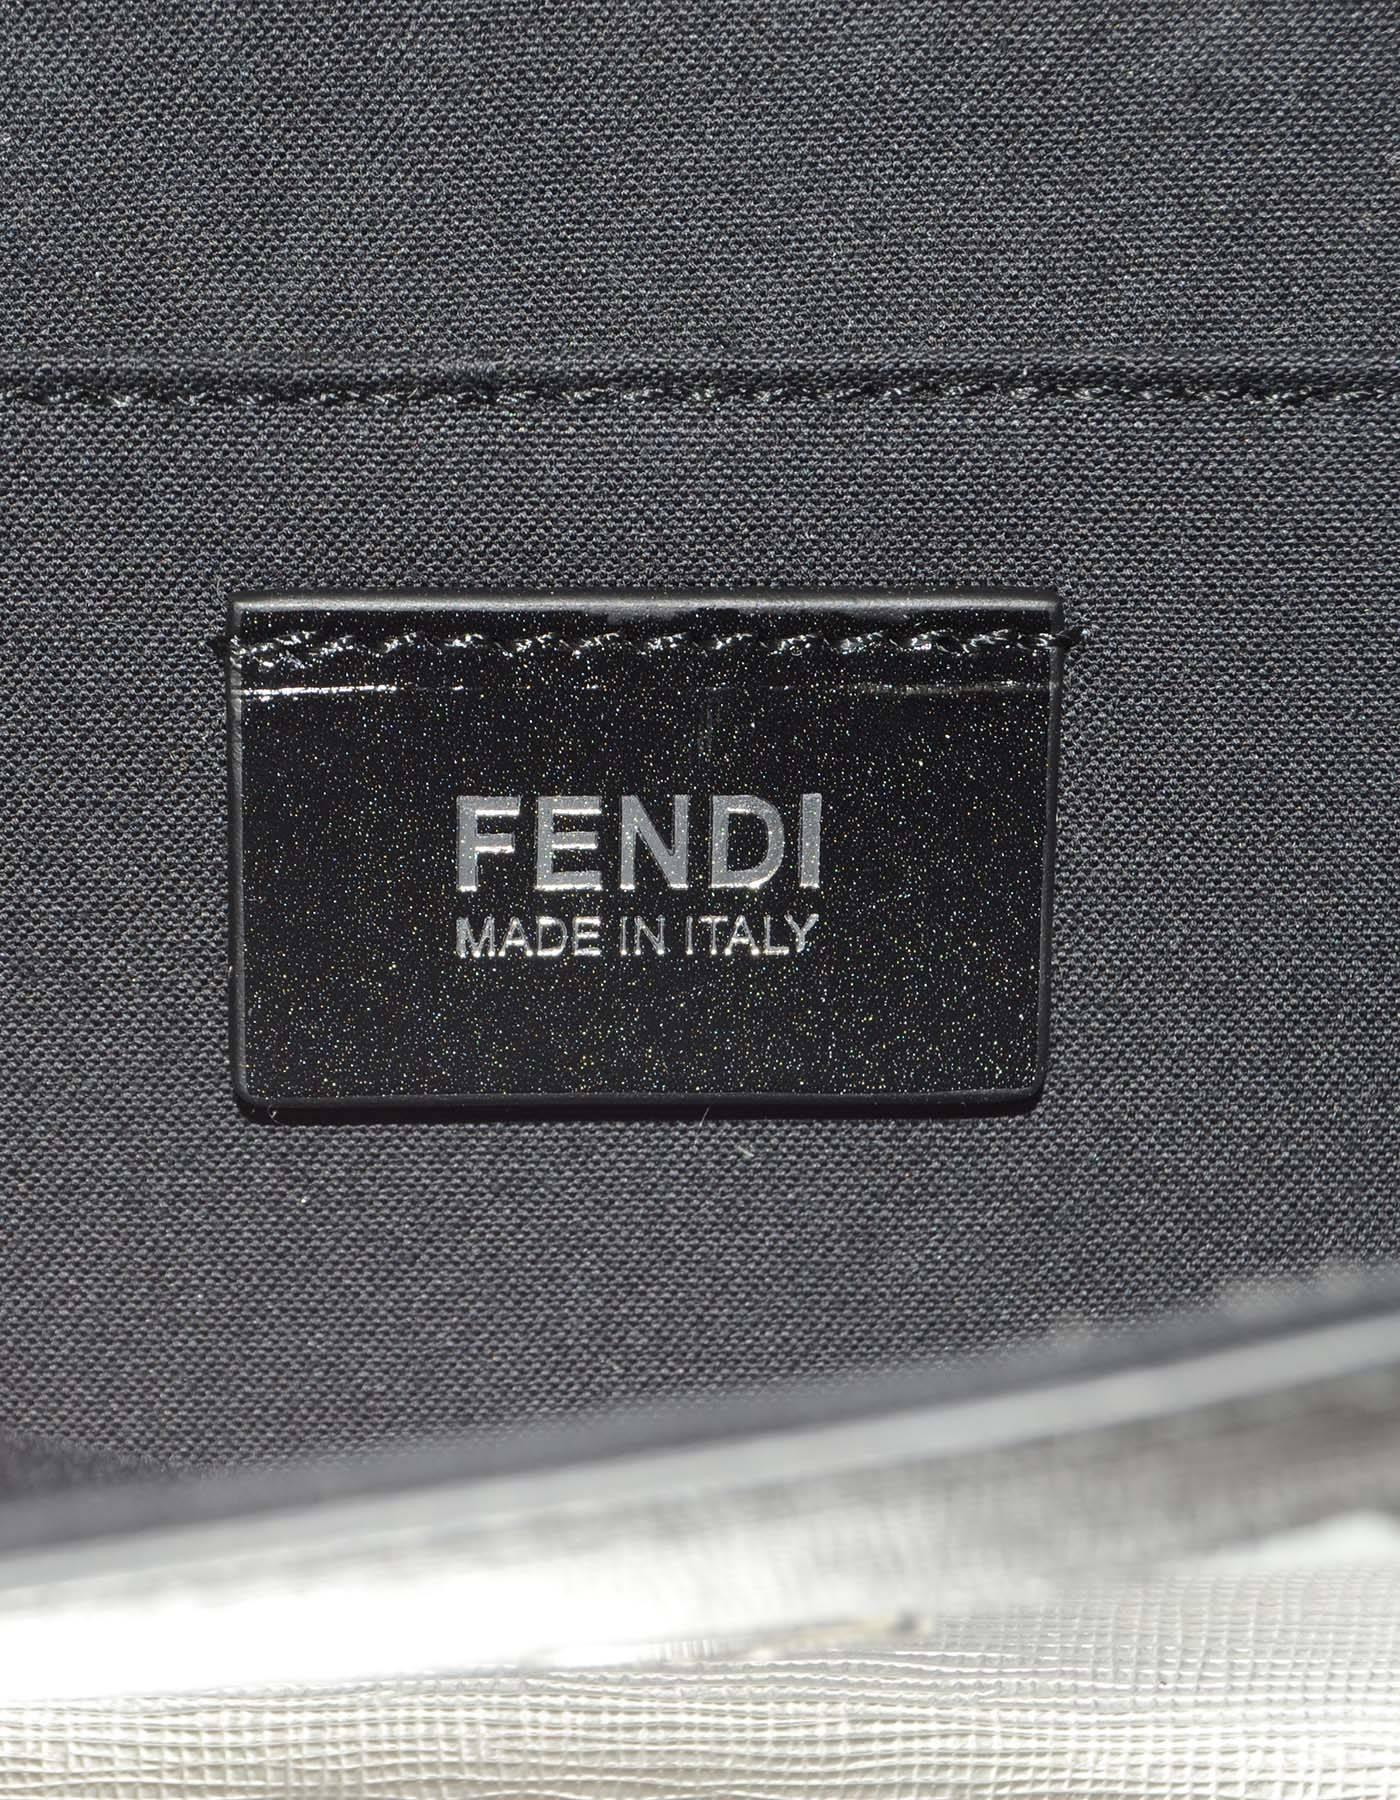 Fendi Black & Silver Textured Leather 'Demijours' Bag SHW rt. $2, 025 3